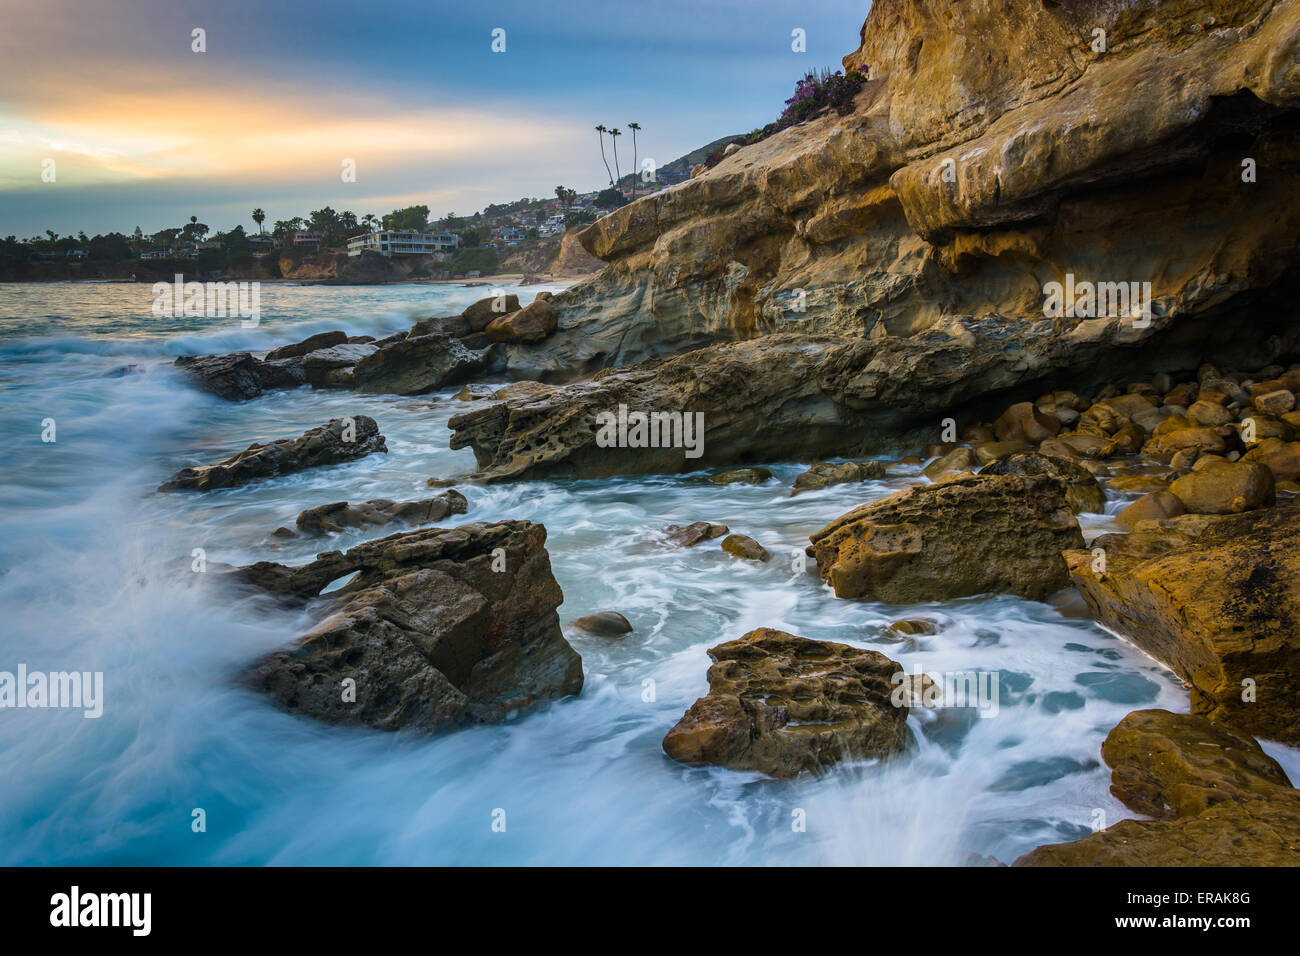 Rocce e onde nell'Oceano Pacifico al tramonto, Monumento a punto, Heisler Park, Laguna Beach in California. Foto Stock